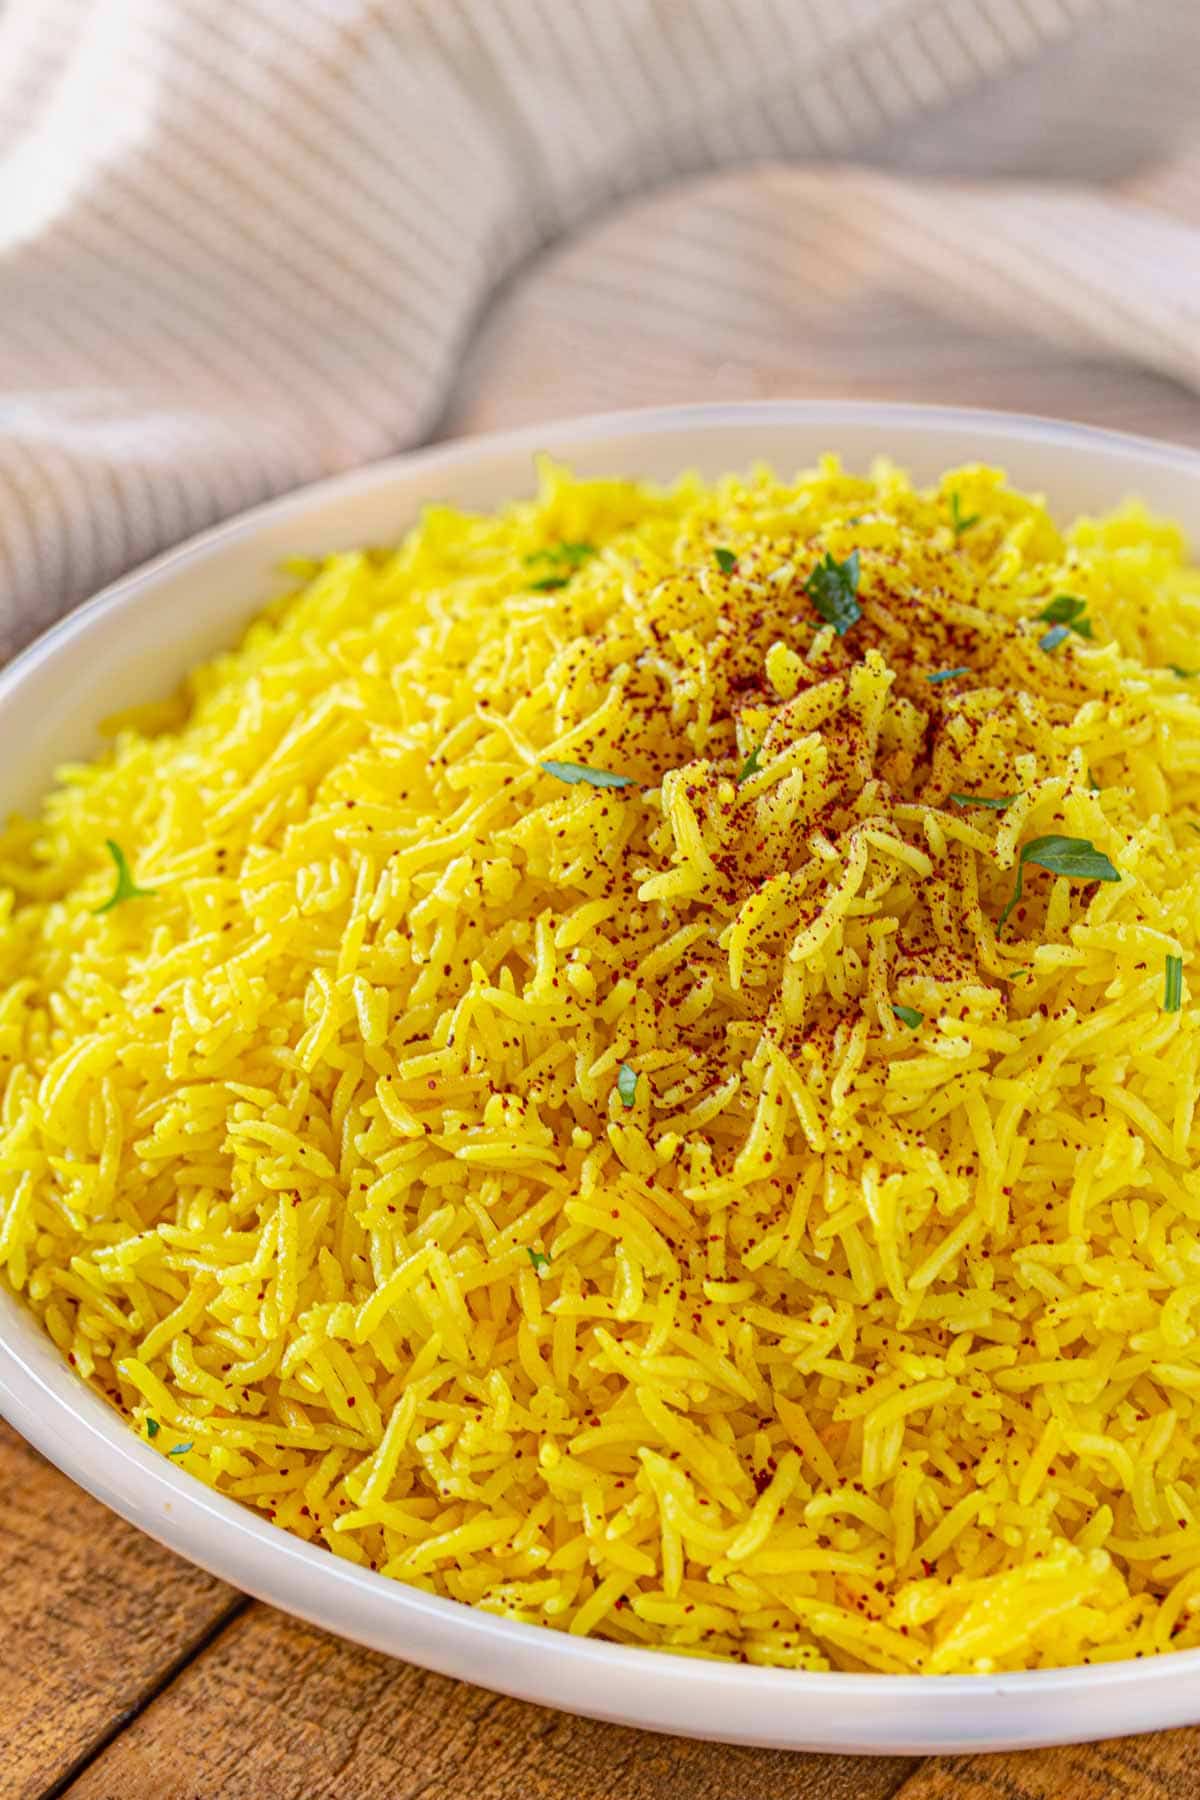 https://dinnerthendessert.com/wp-content/uploads/2020/06/Persian-Rice.jpg